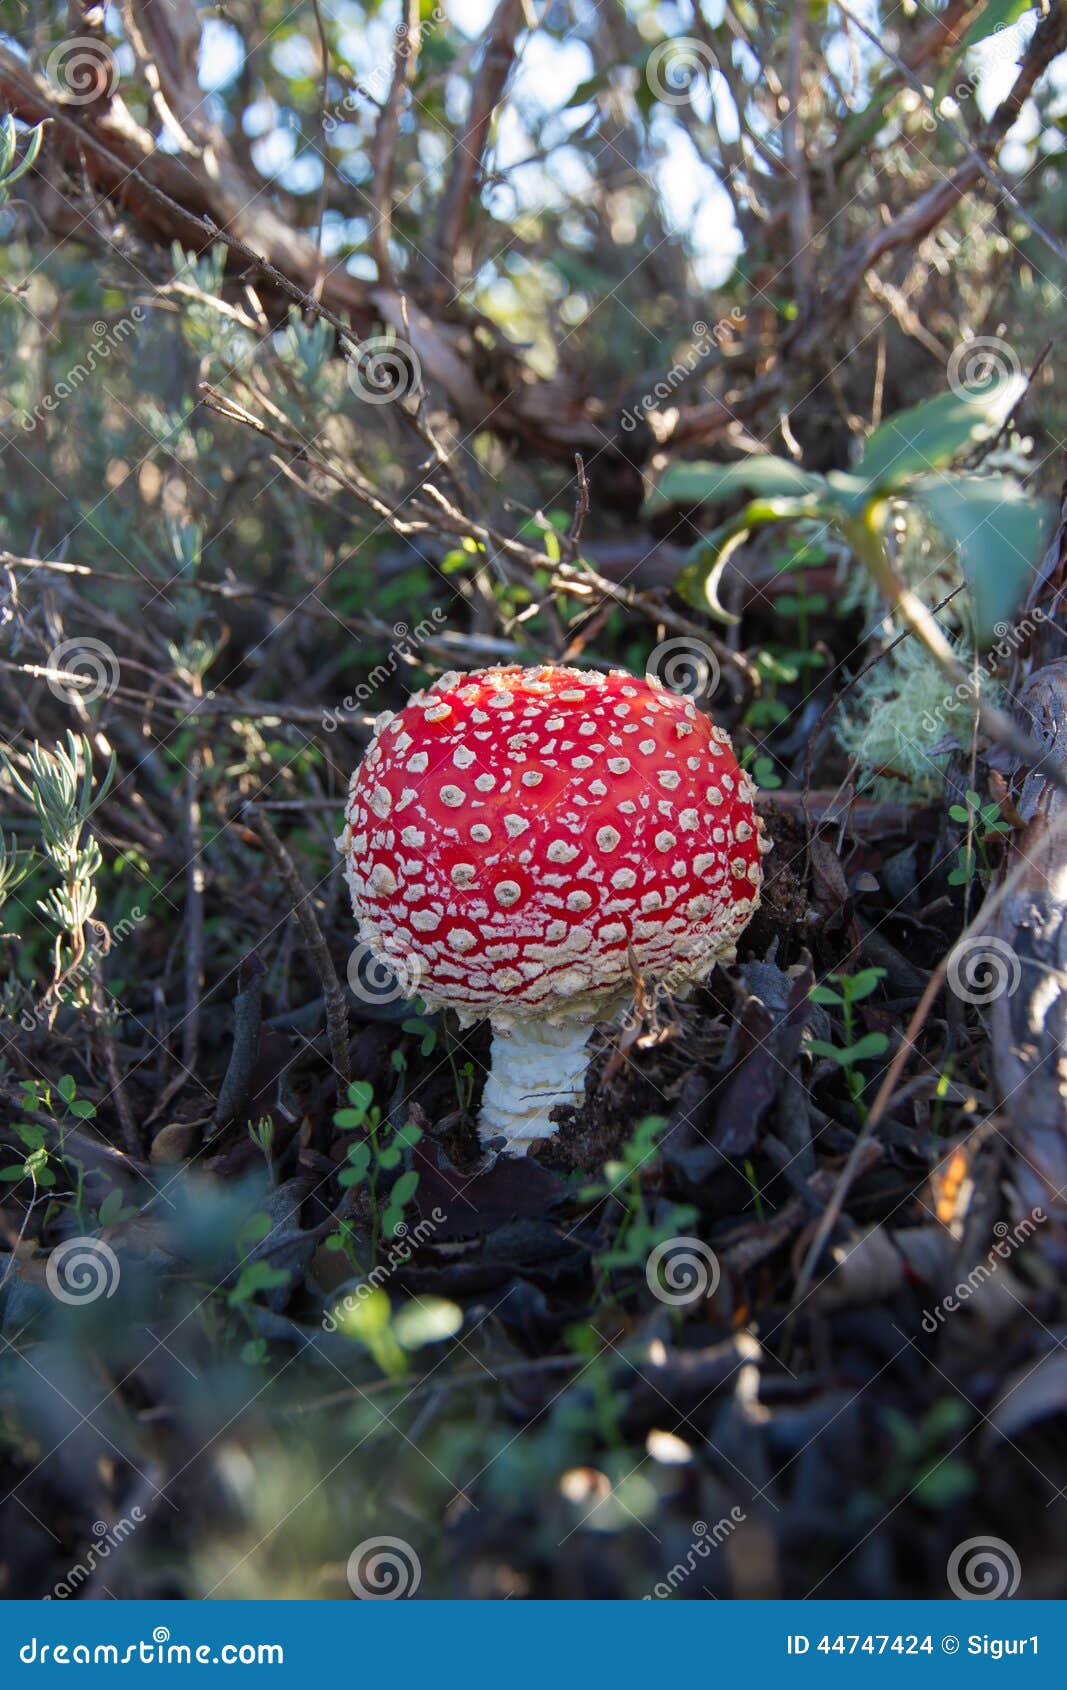 mushroom amanita muscaria